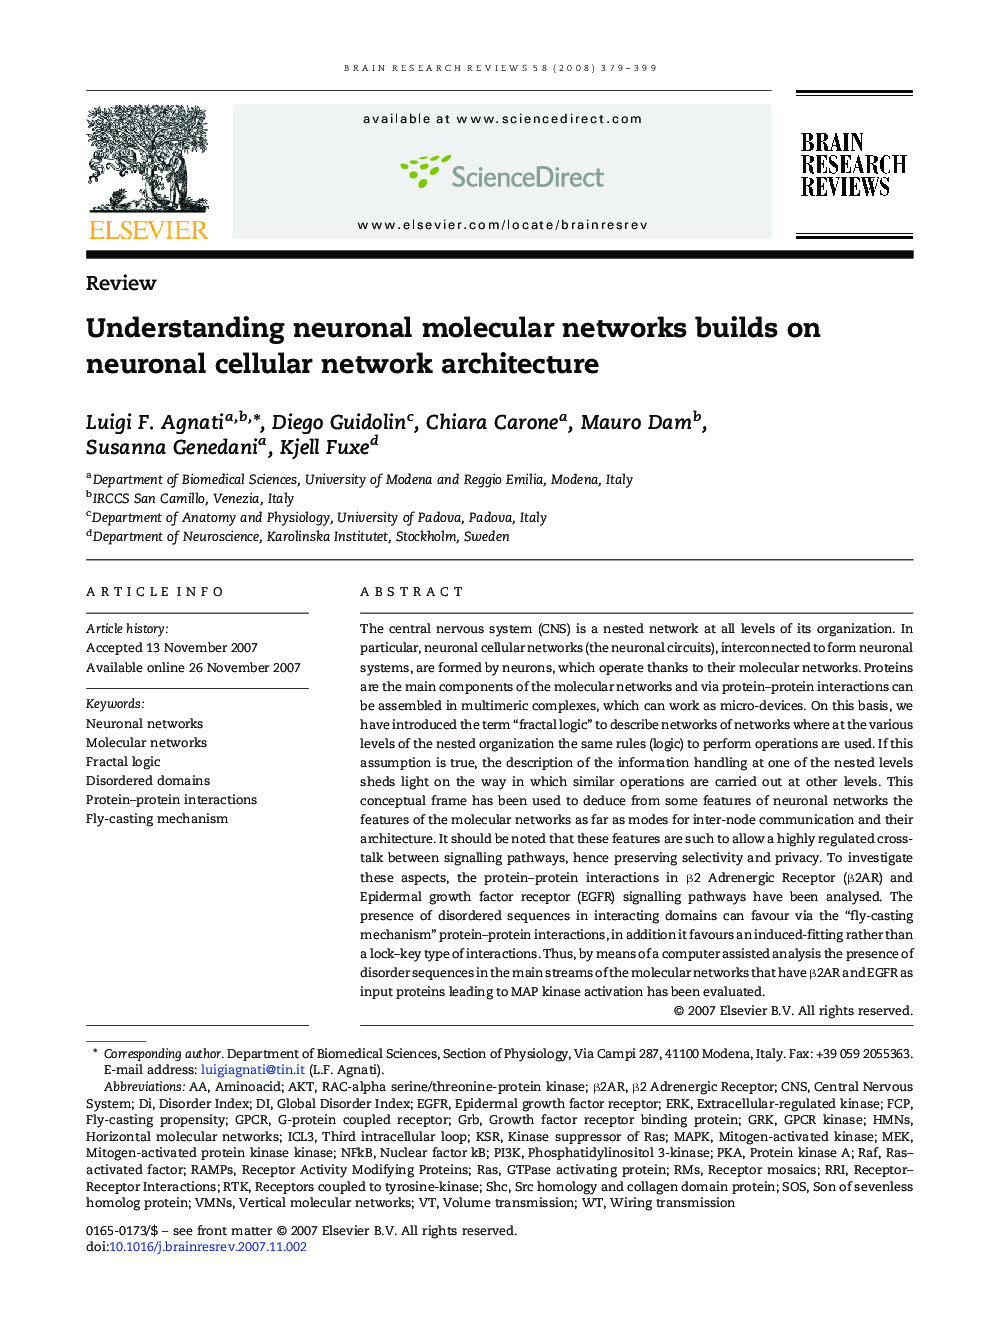 Understanding neuronal molecular networks builds on neuronal cellular network architecture